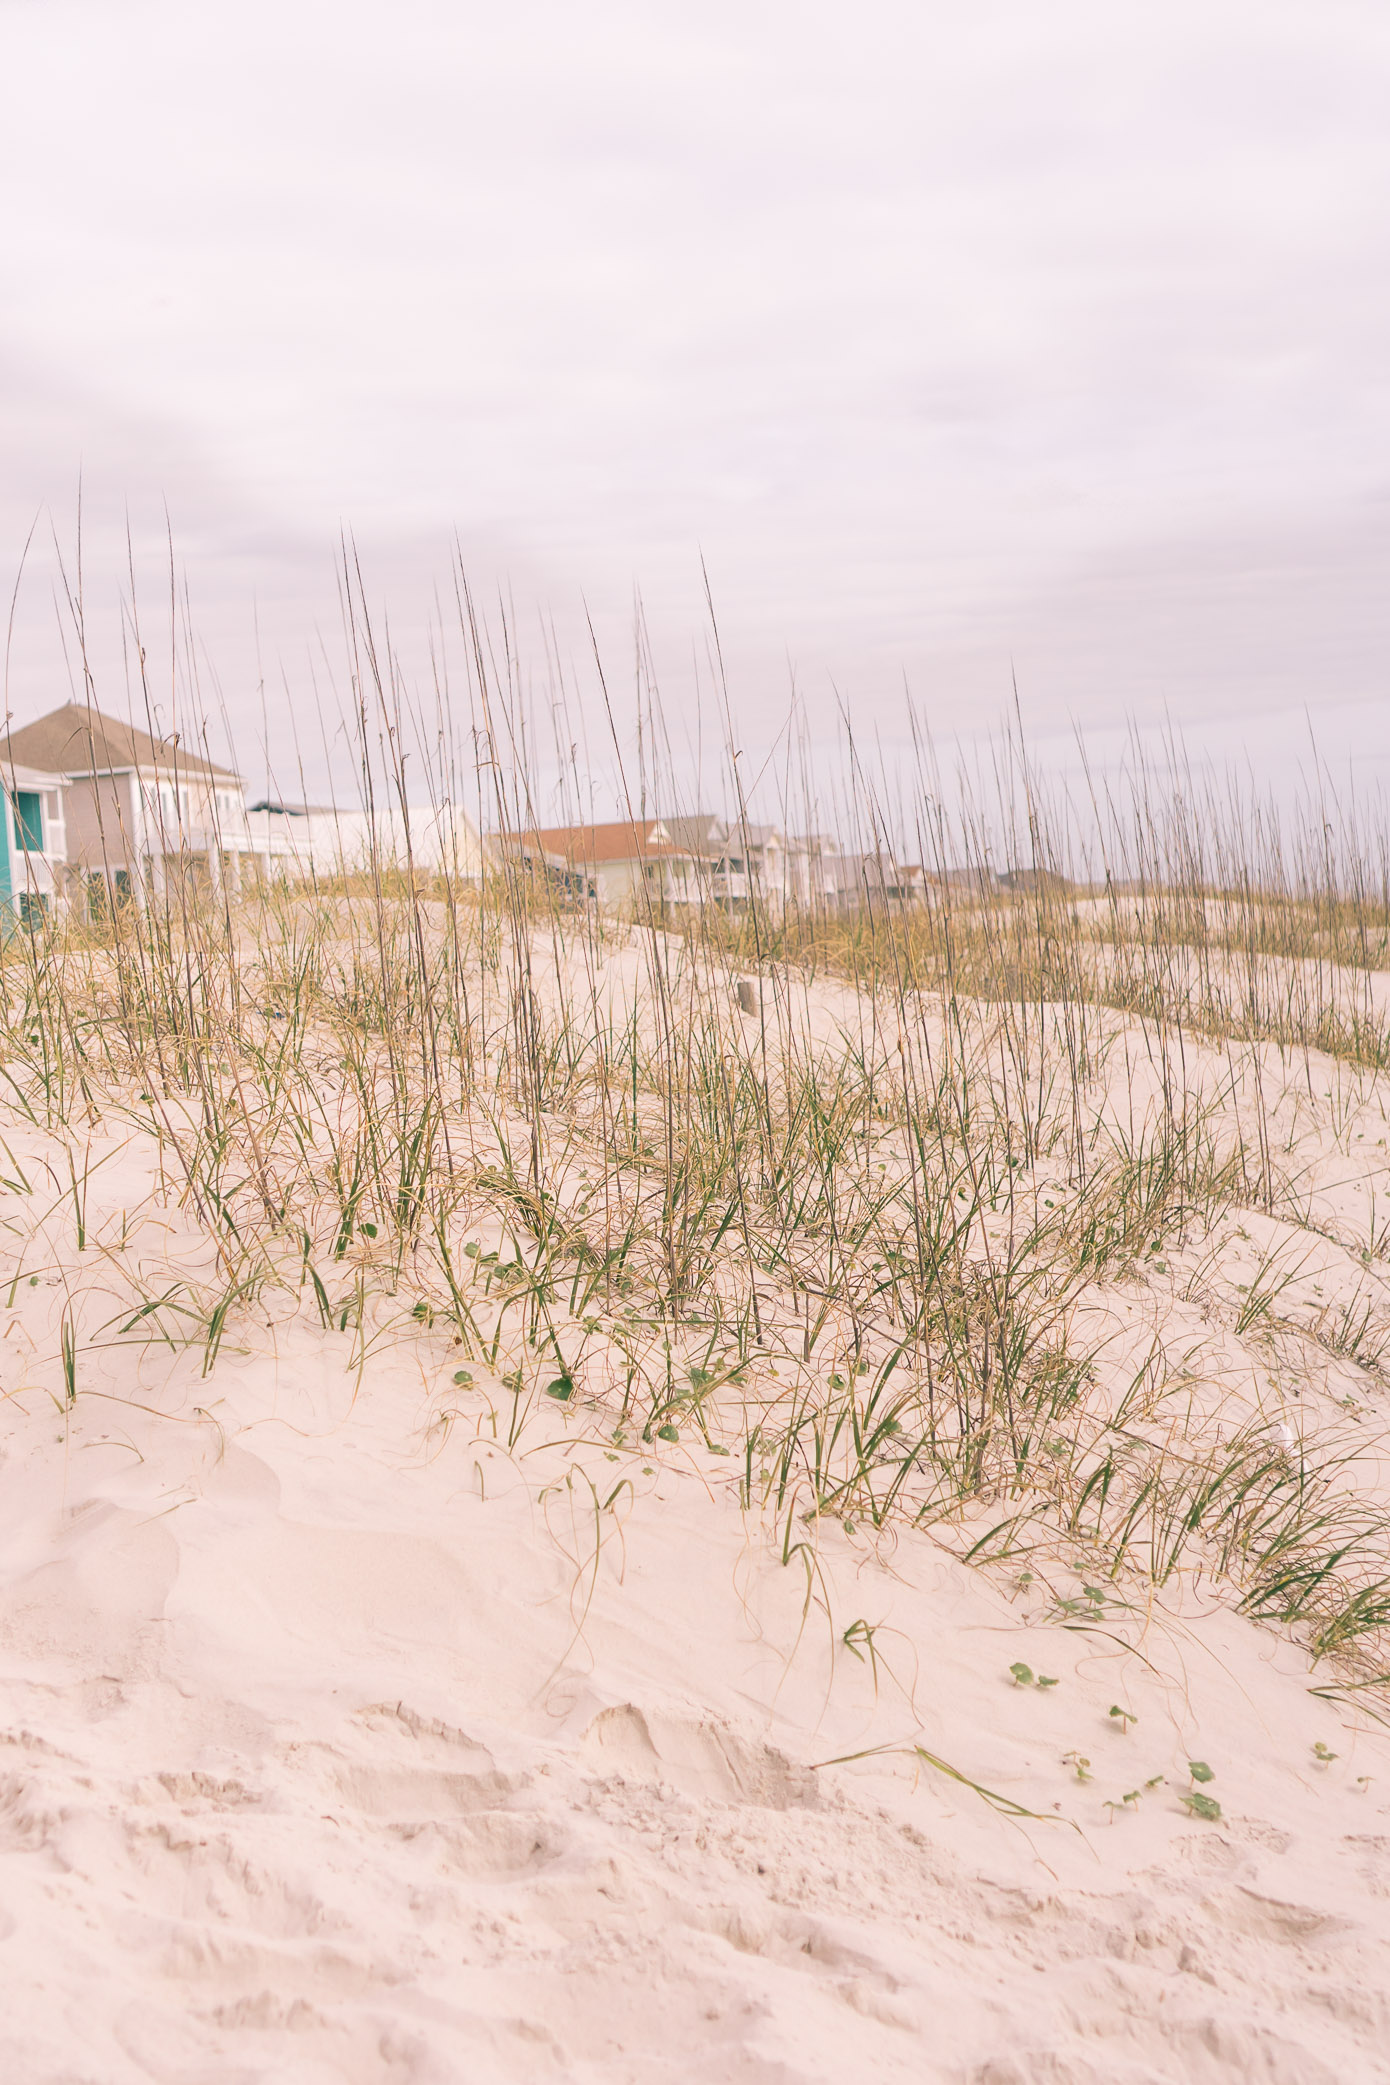 Carolina Beach Travel Guide by Popular Blogger Louella Reese